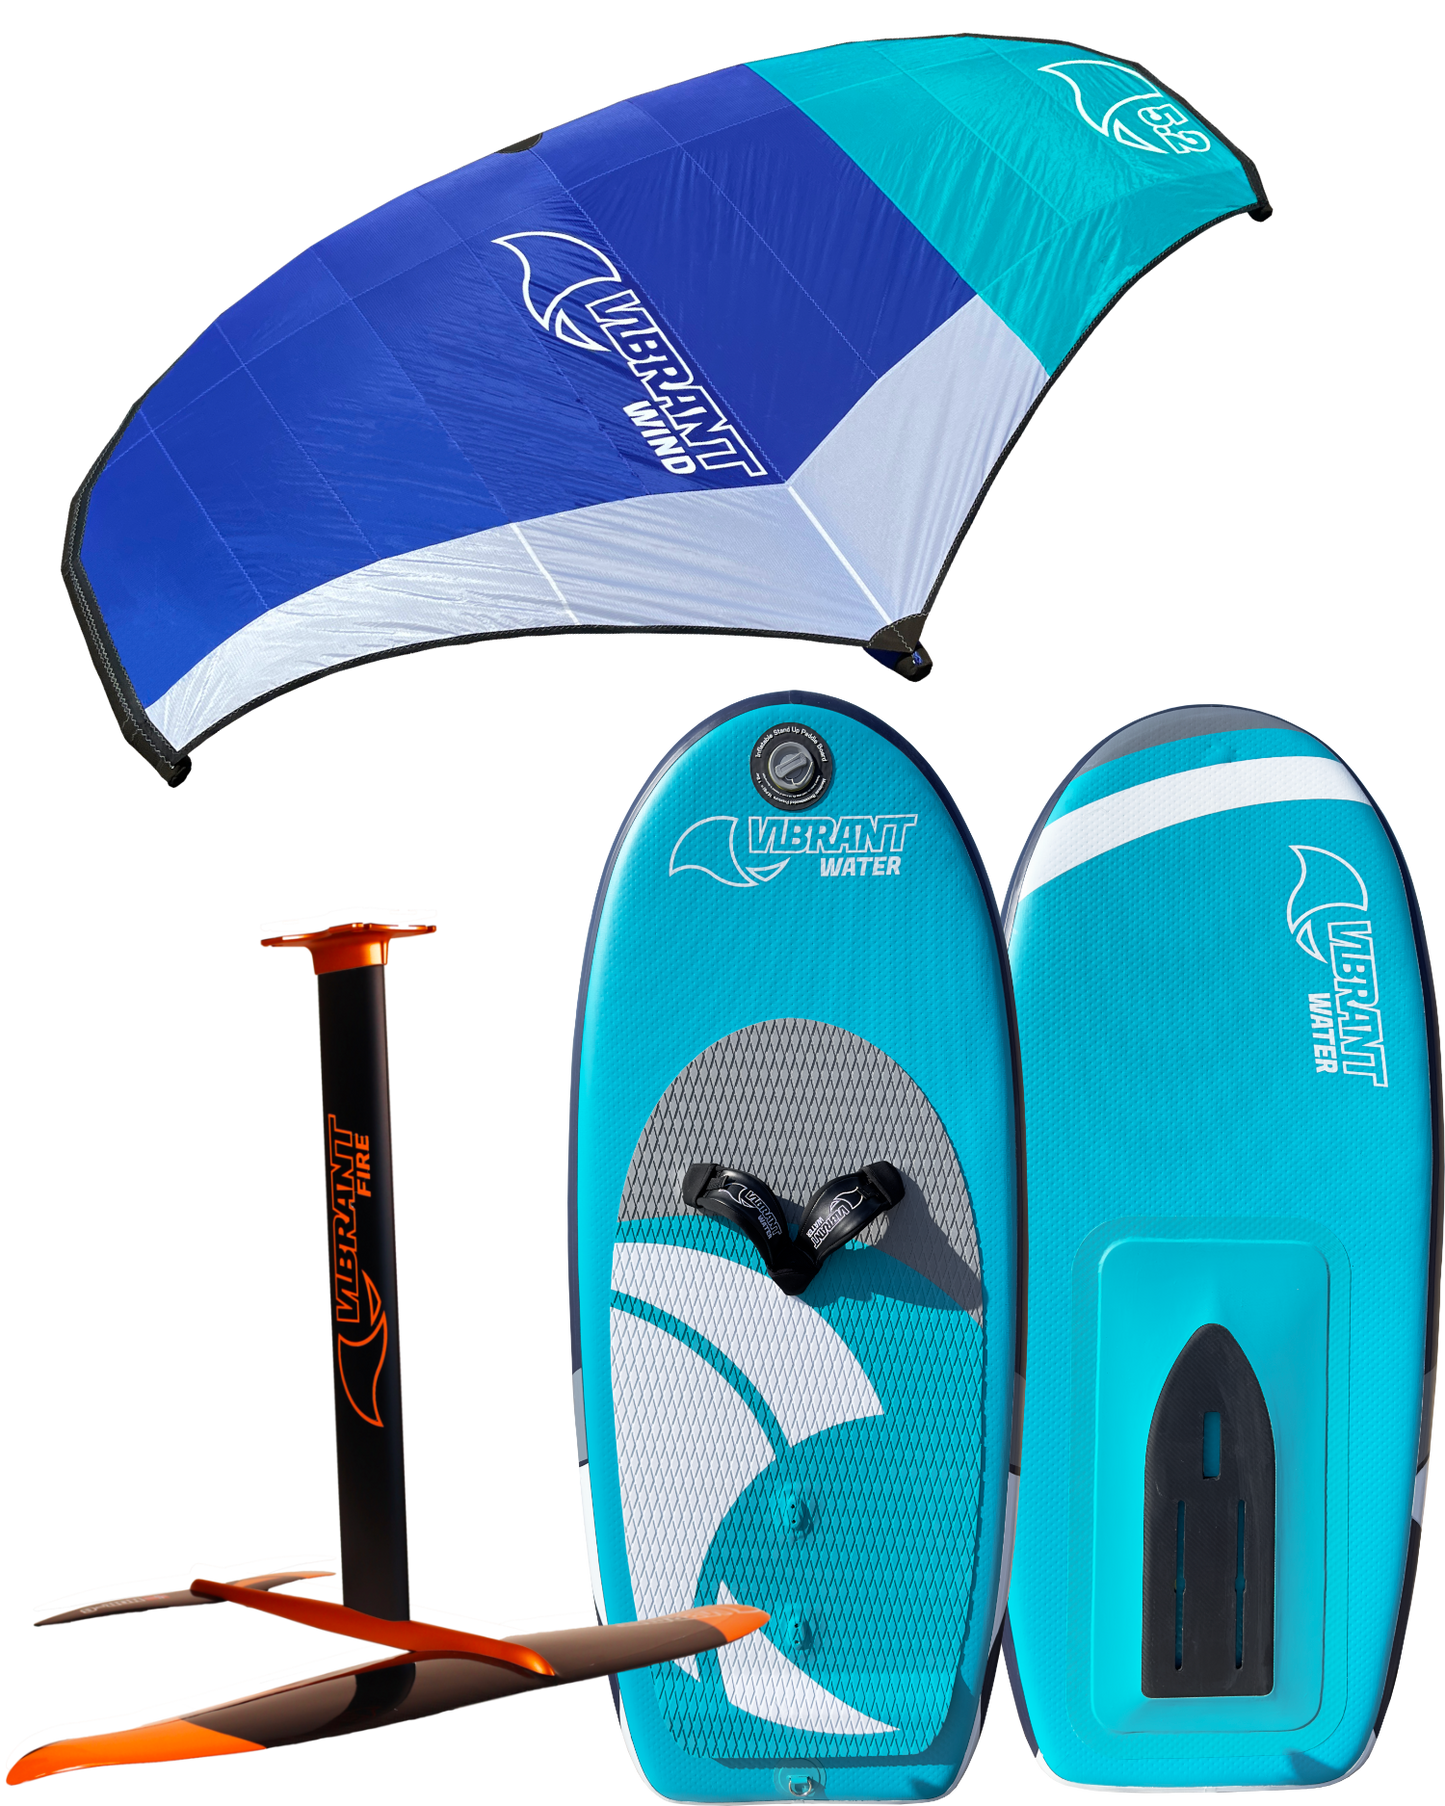 VIBRANT SURF - Wingfoil light wind package offer